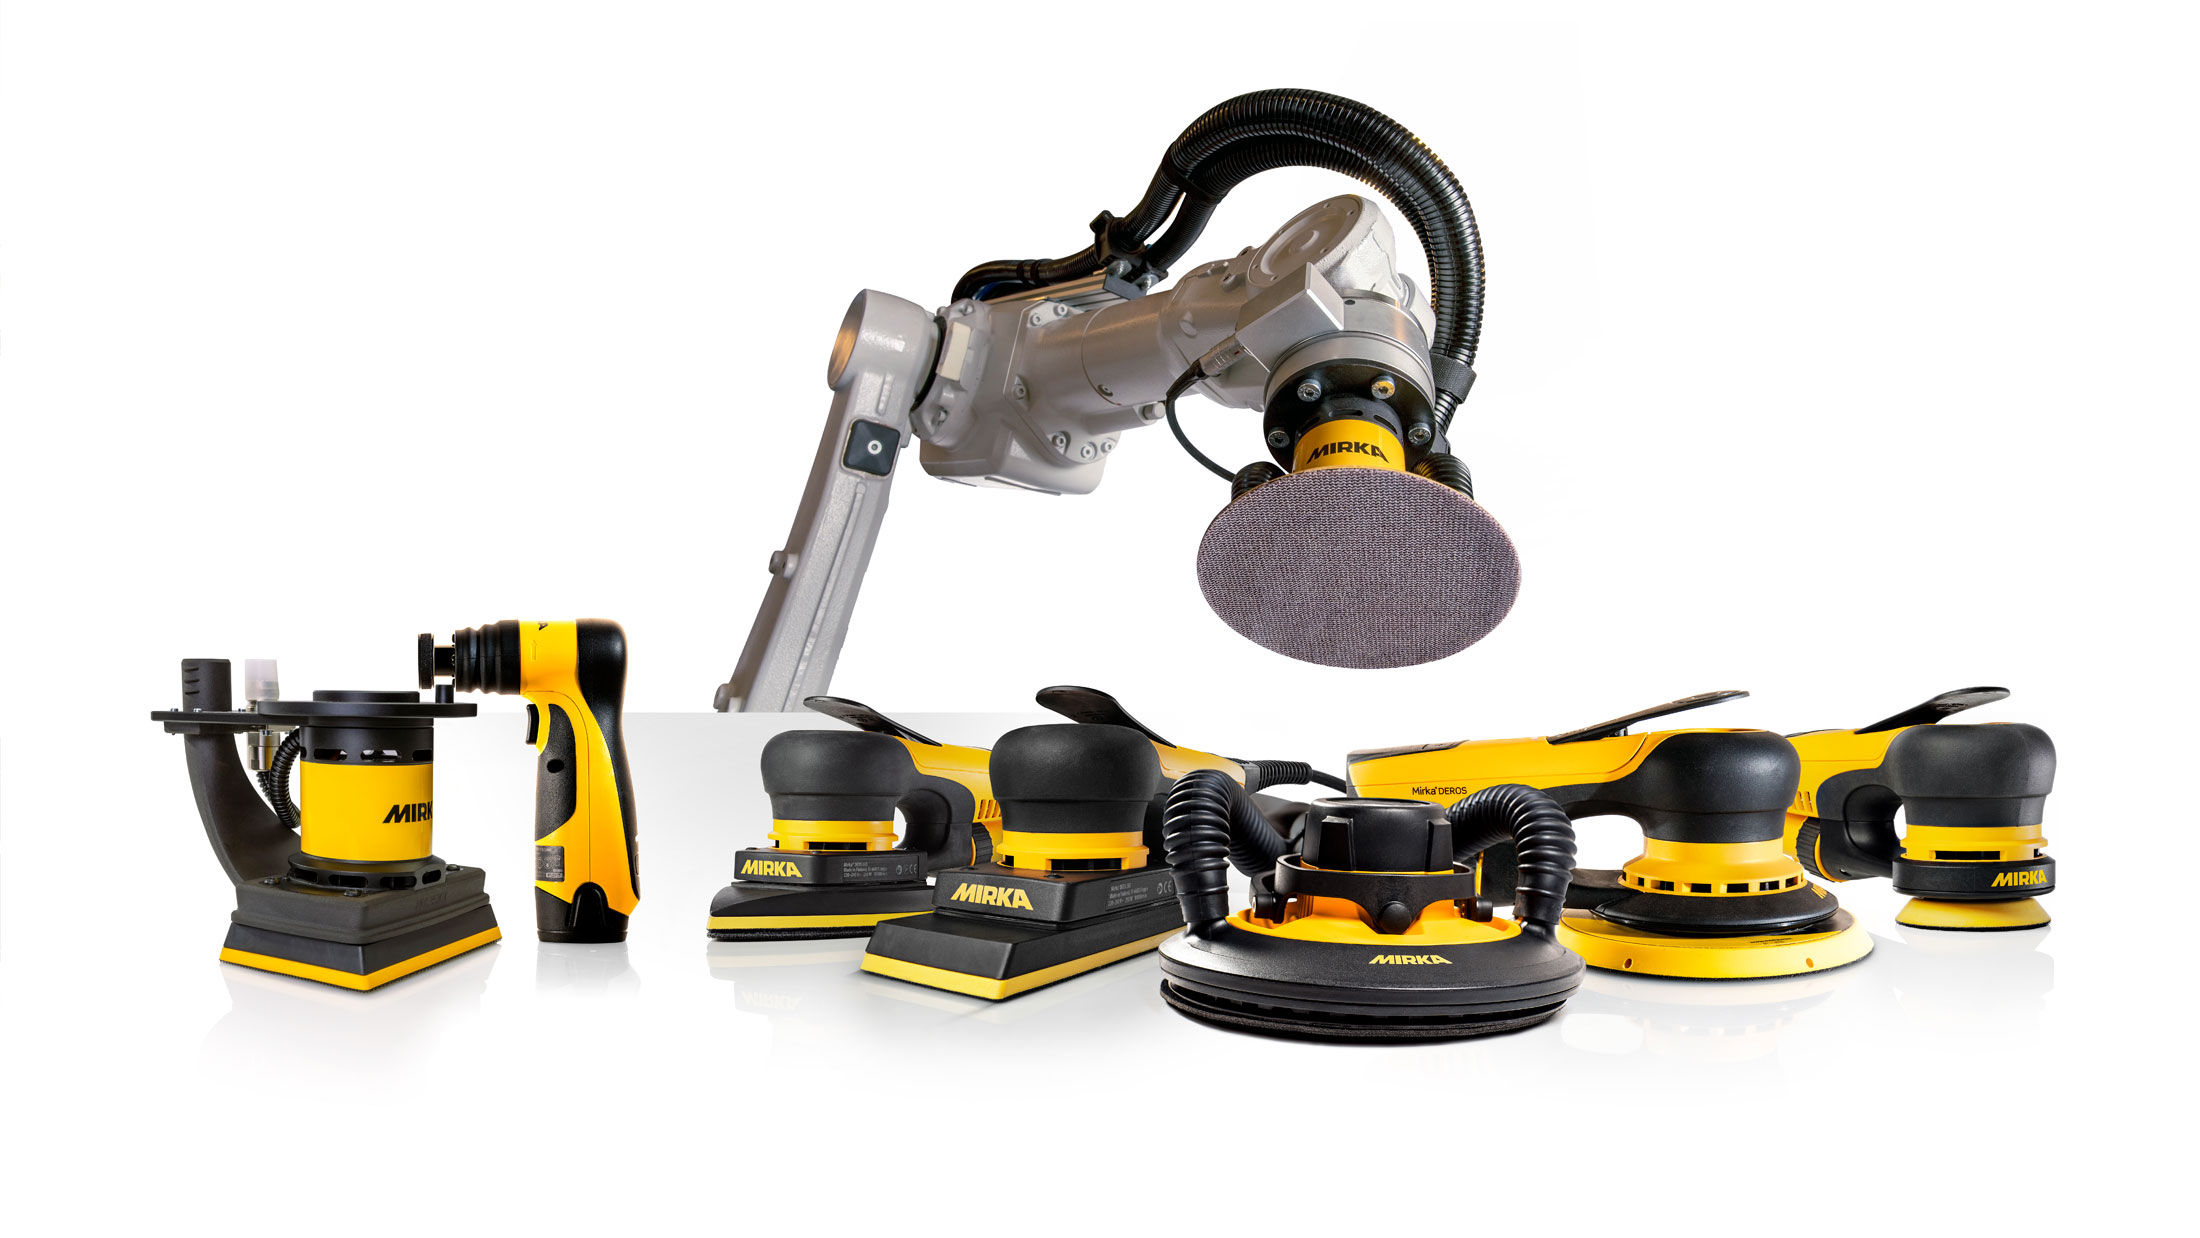 Group image of all Mirka power tools.